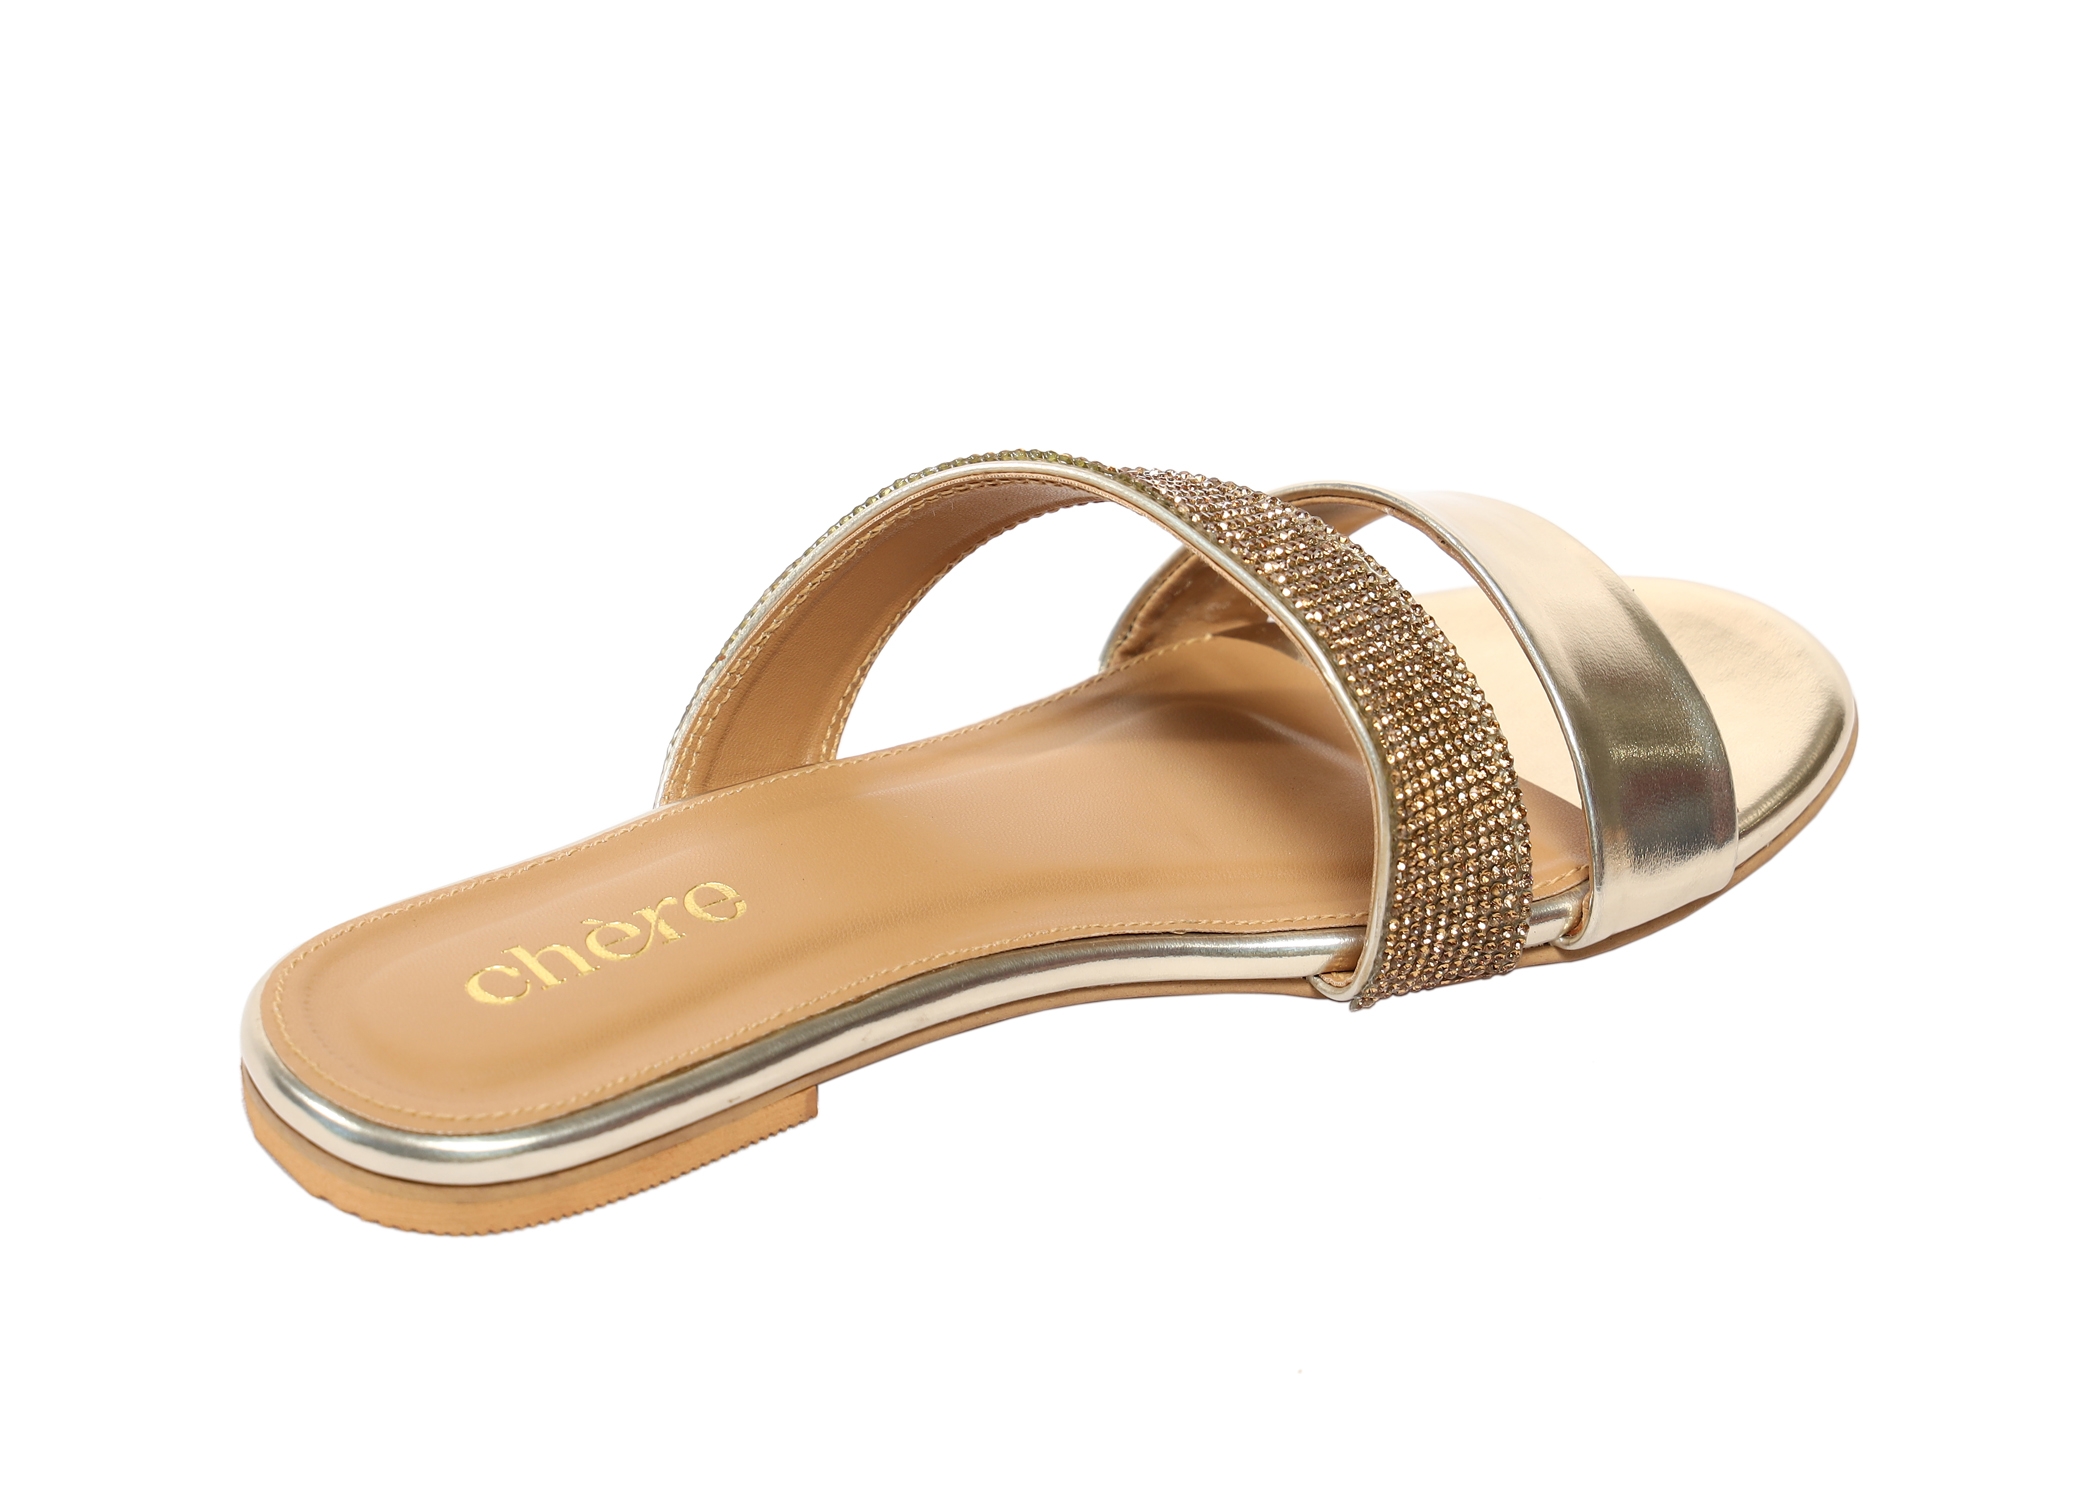 Chere | Women Classic Gold Casual Flat Sandals - Chere